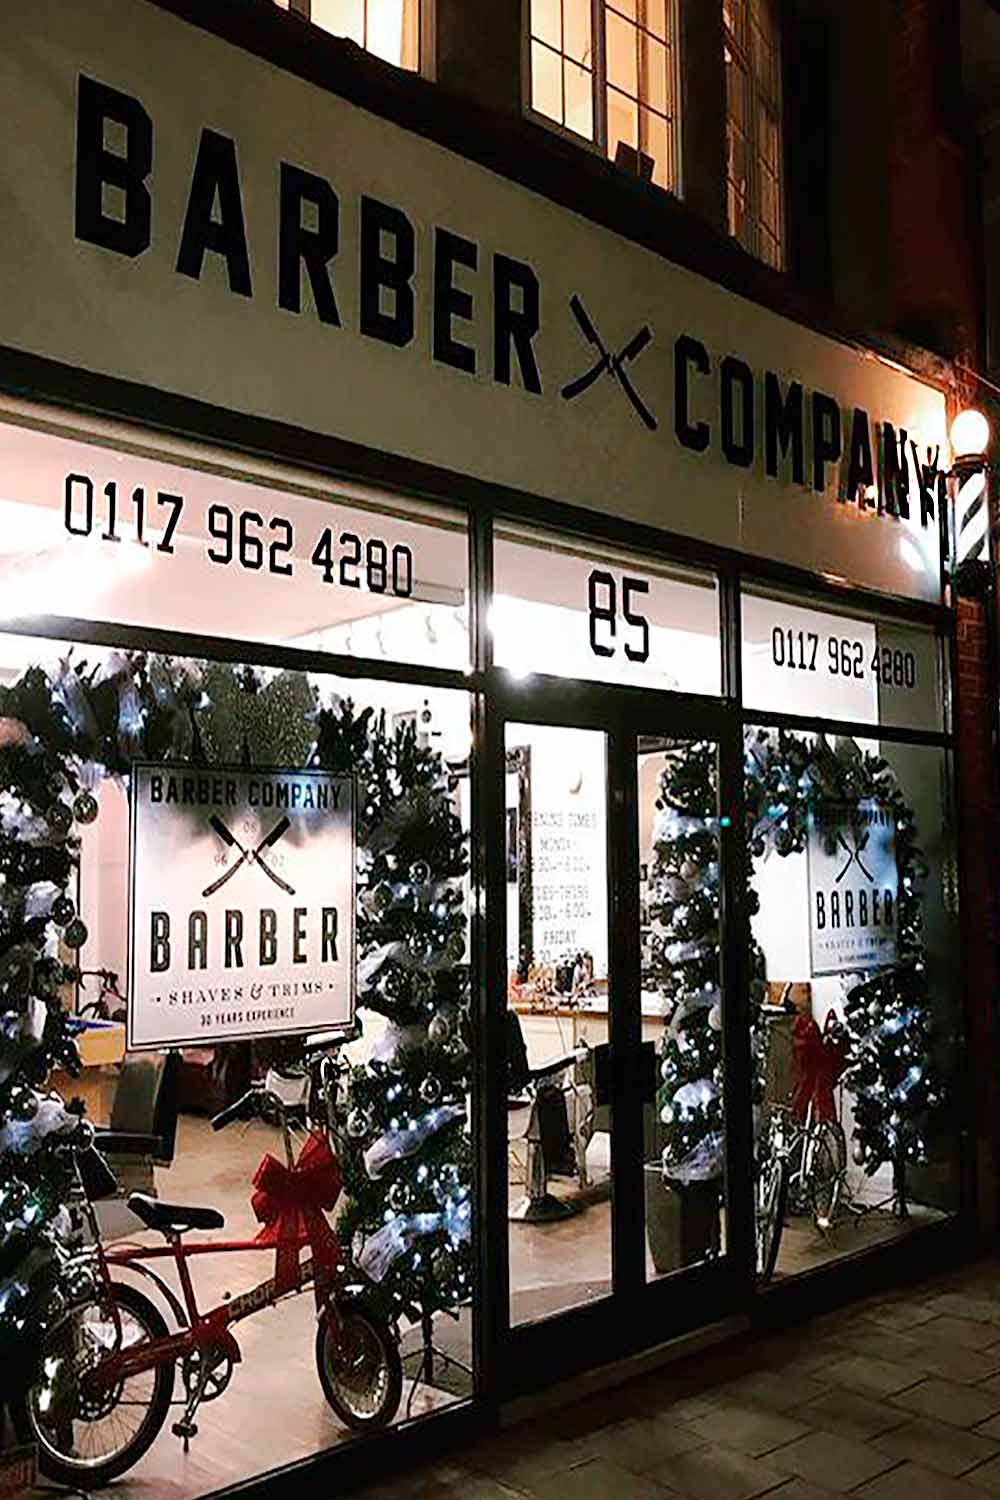 Barber Company Bristol 1